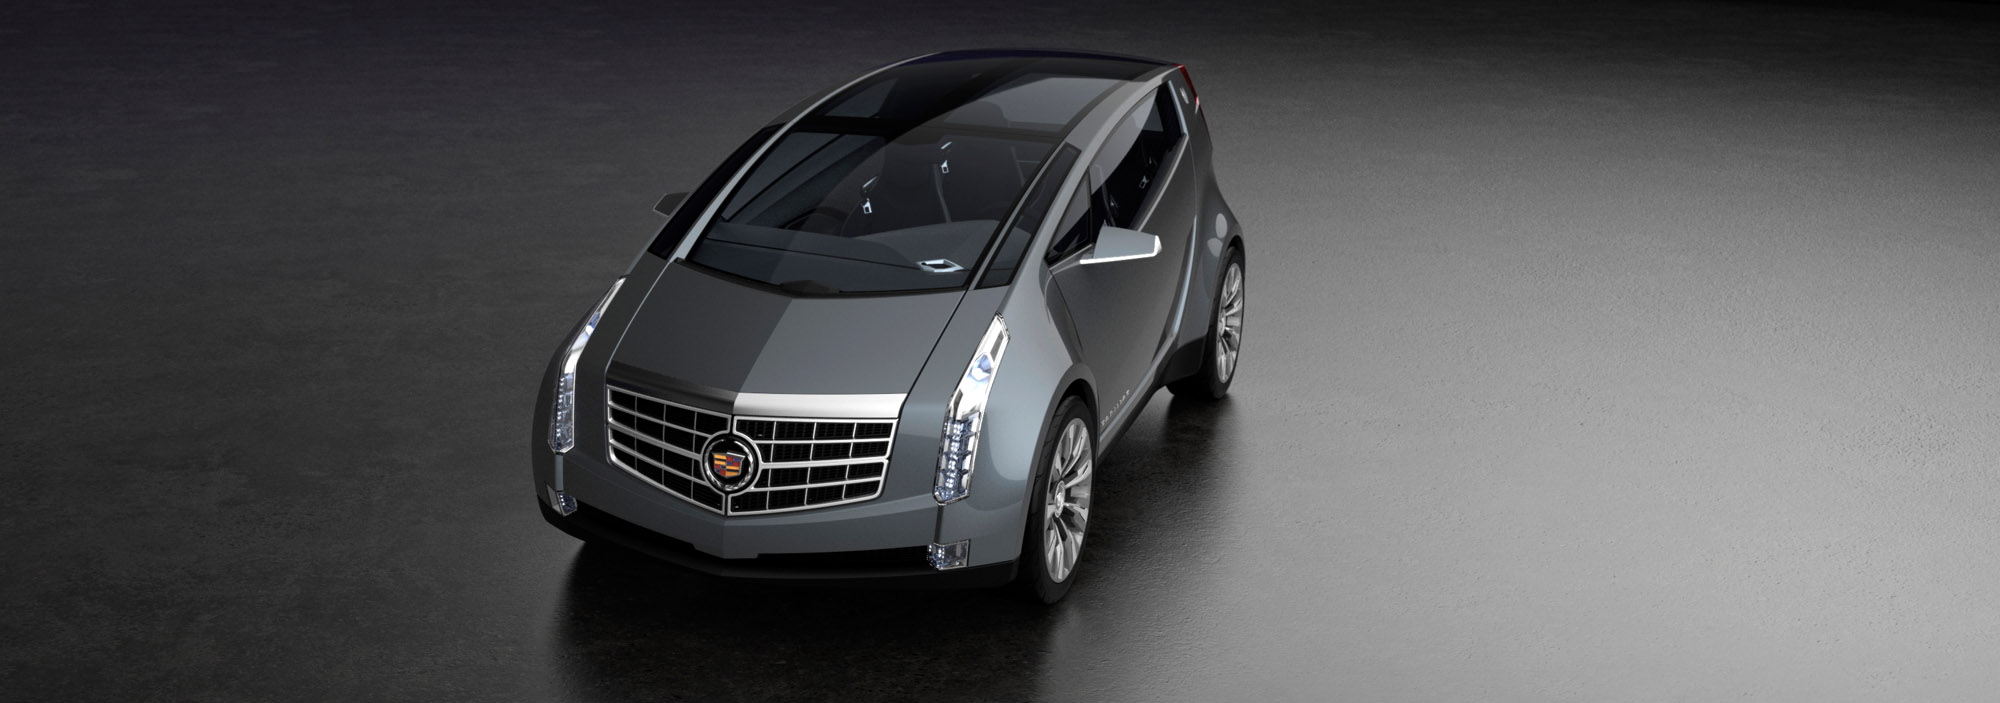 Cadillac Urban Luxury Concept